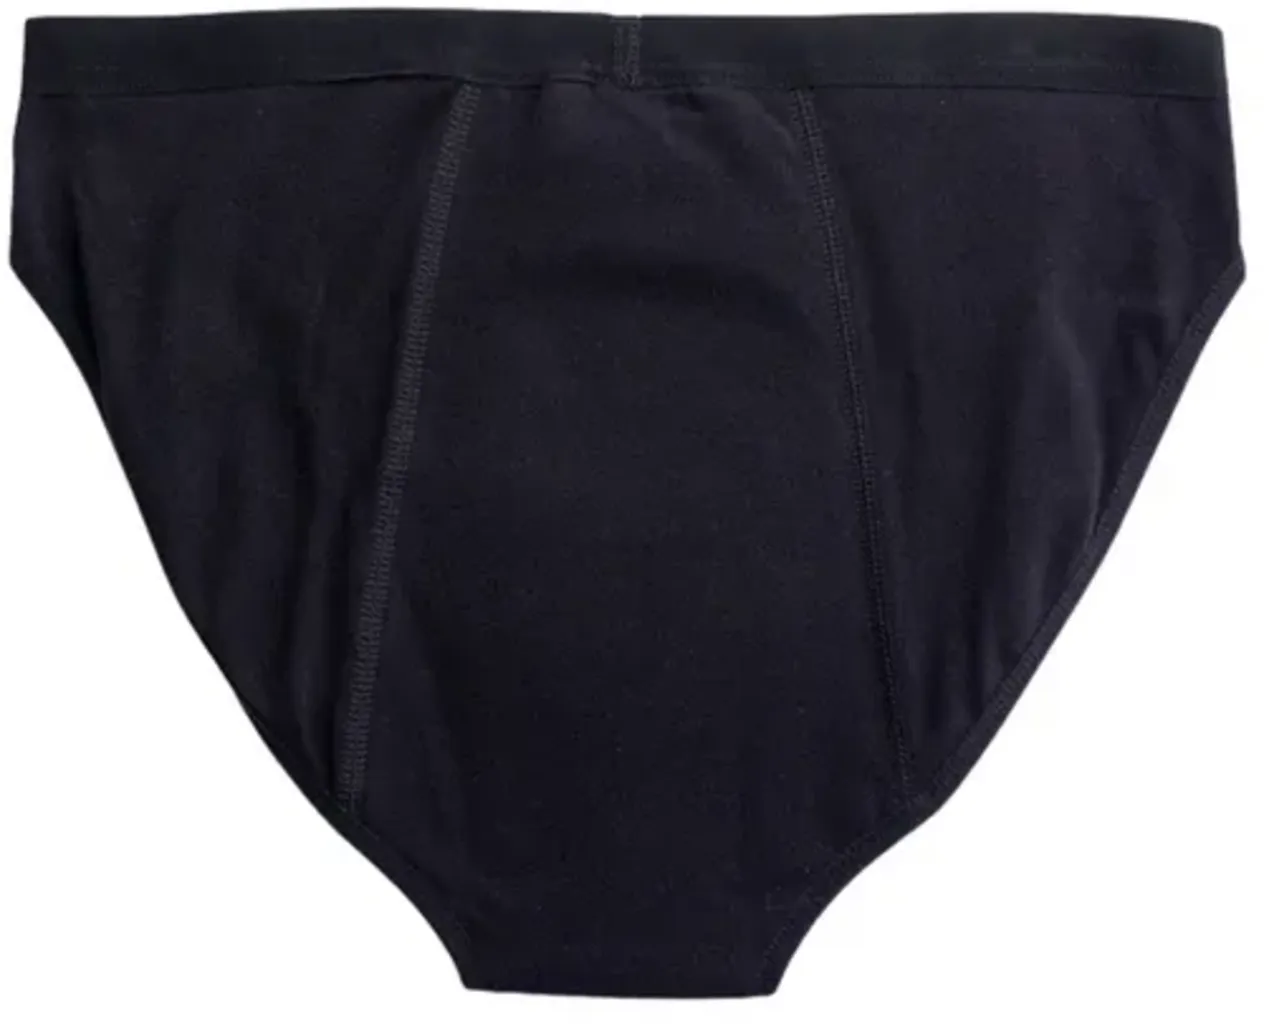 https://ec.nice-cdn.com/upload/image/product/large/default/imse-black-teen-bikini-period-underwear-heavy-flow-2112619-en.webp